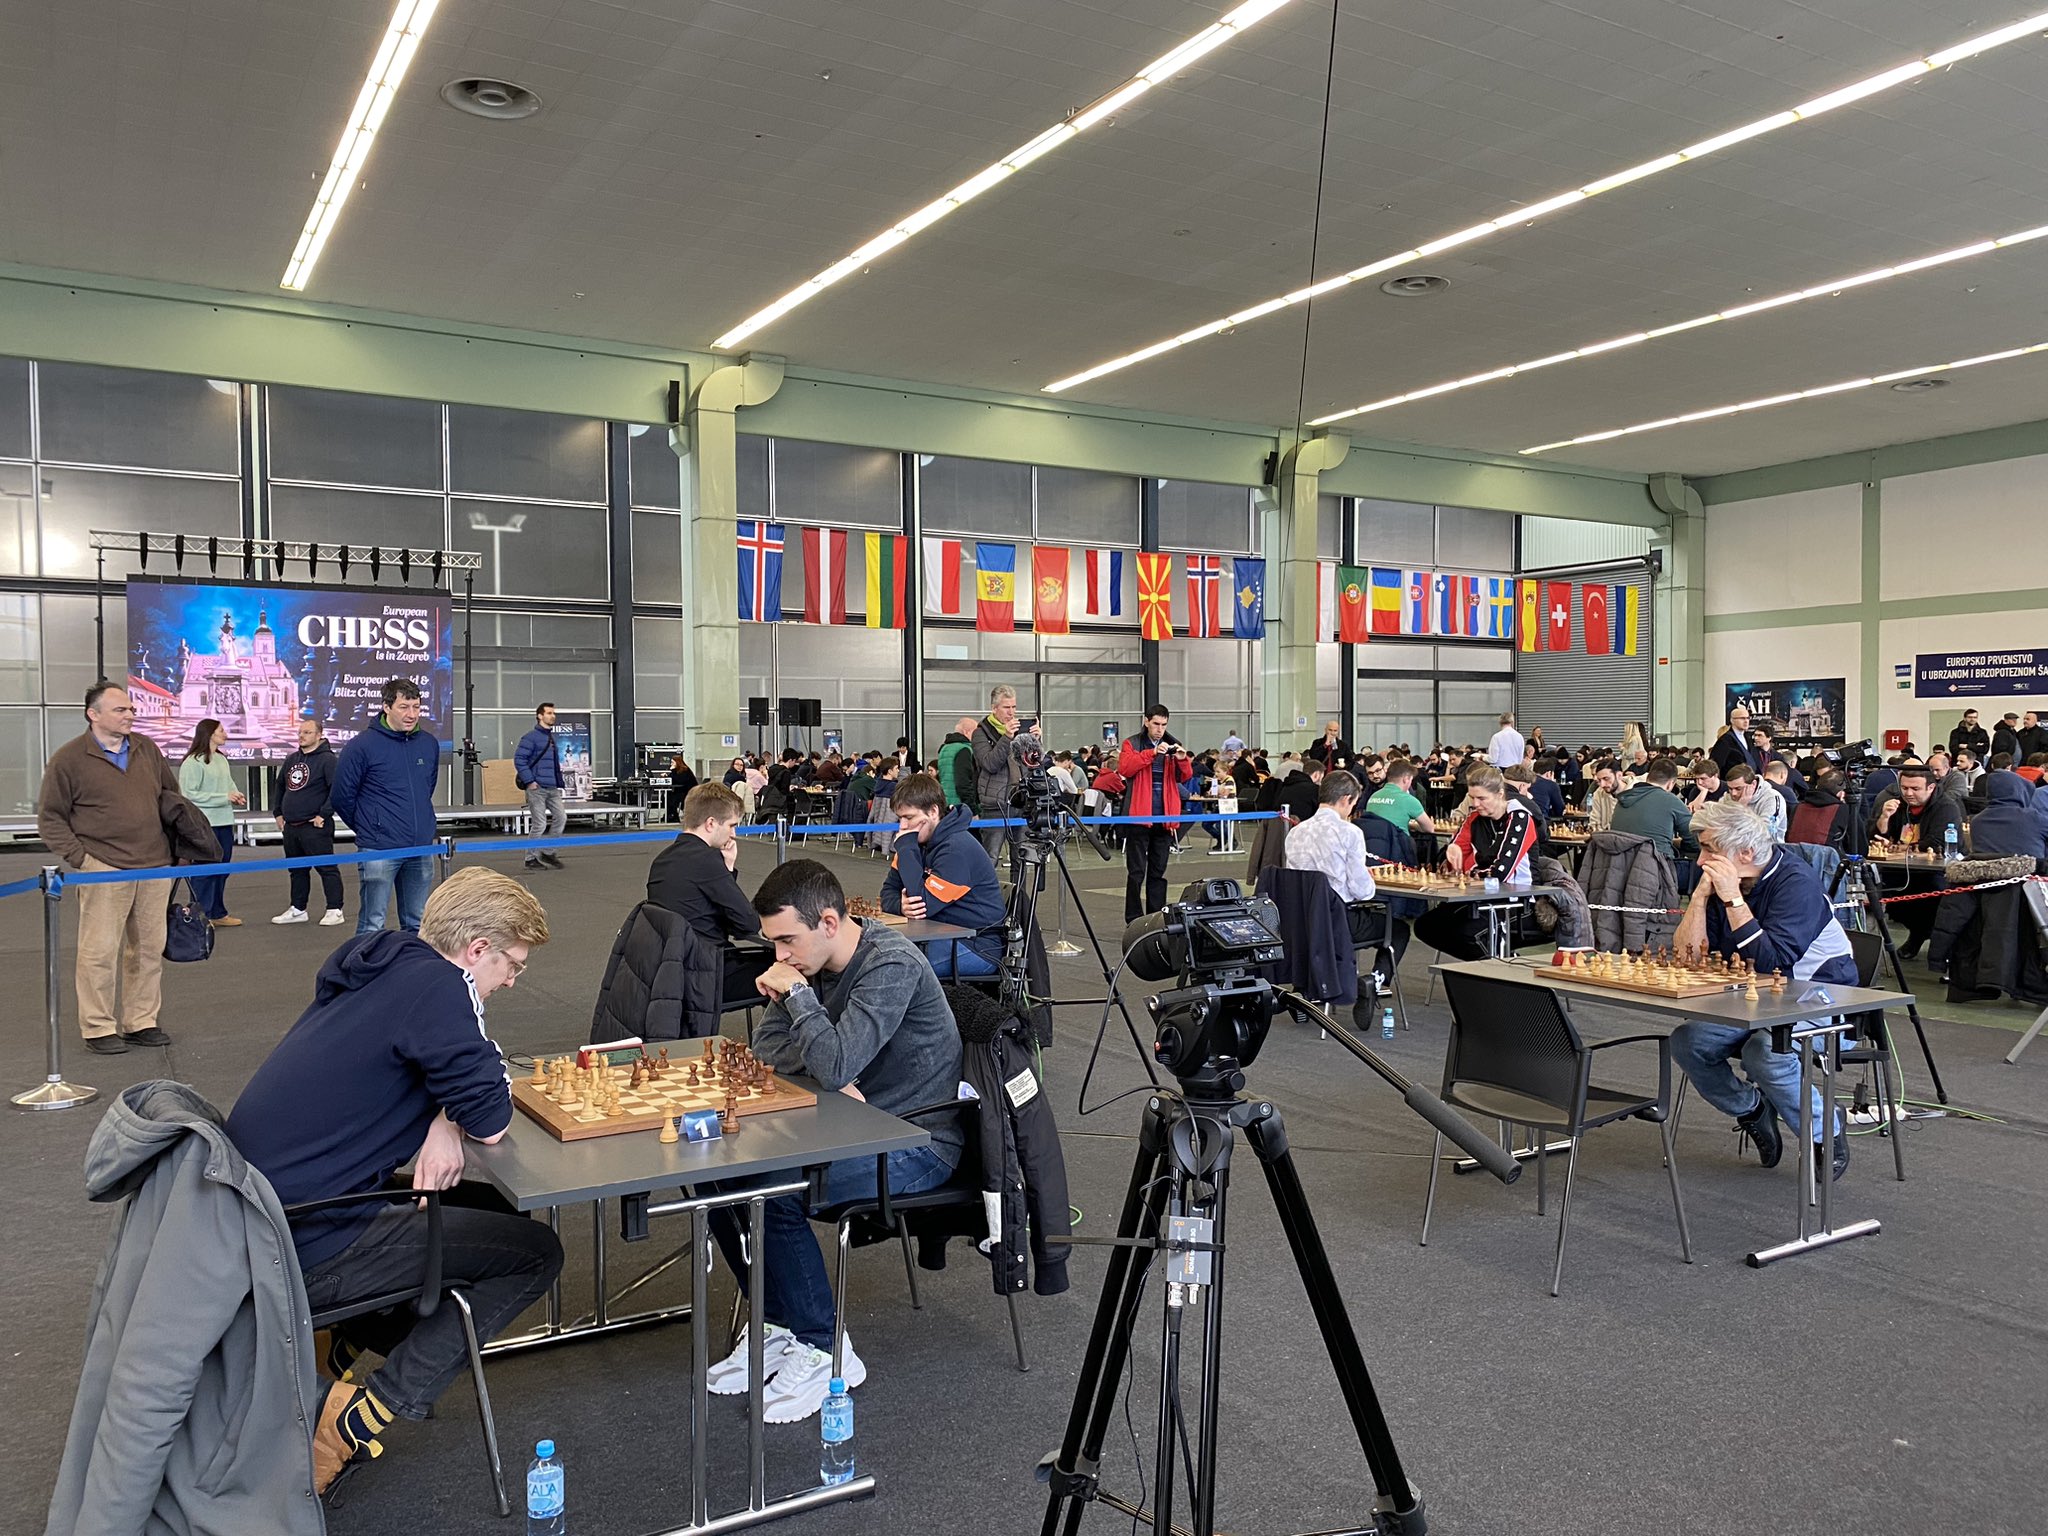 EUROPEAN INDIVIDUAL BLITZ&RAPID CHESS CHAMPIONSHIPS 2018 STARTED – European  Chess Union